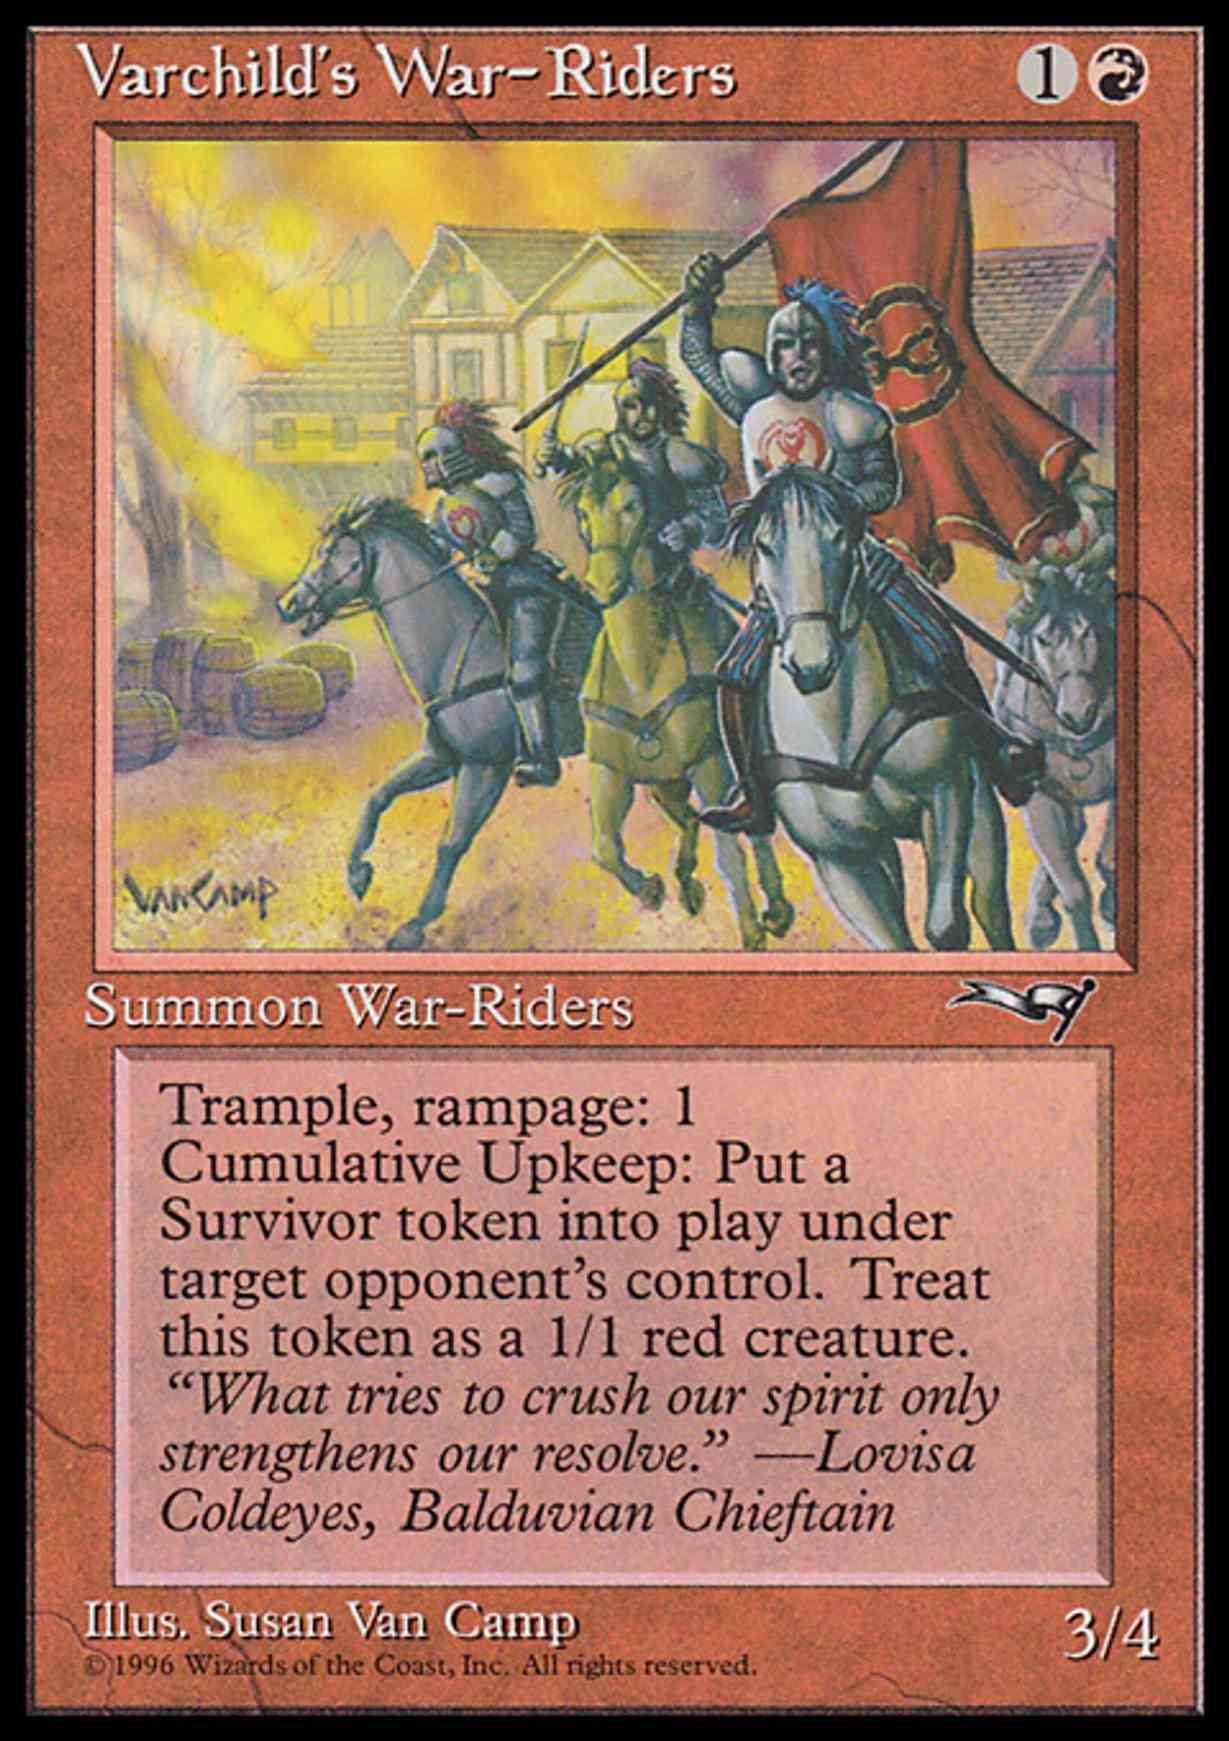 Varchild's War-Riders magic card front